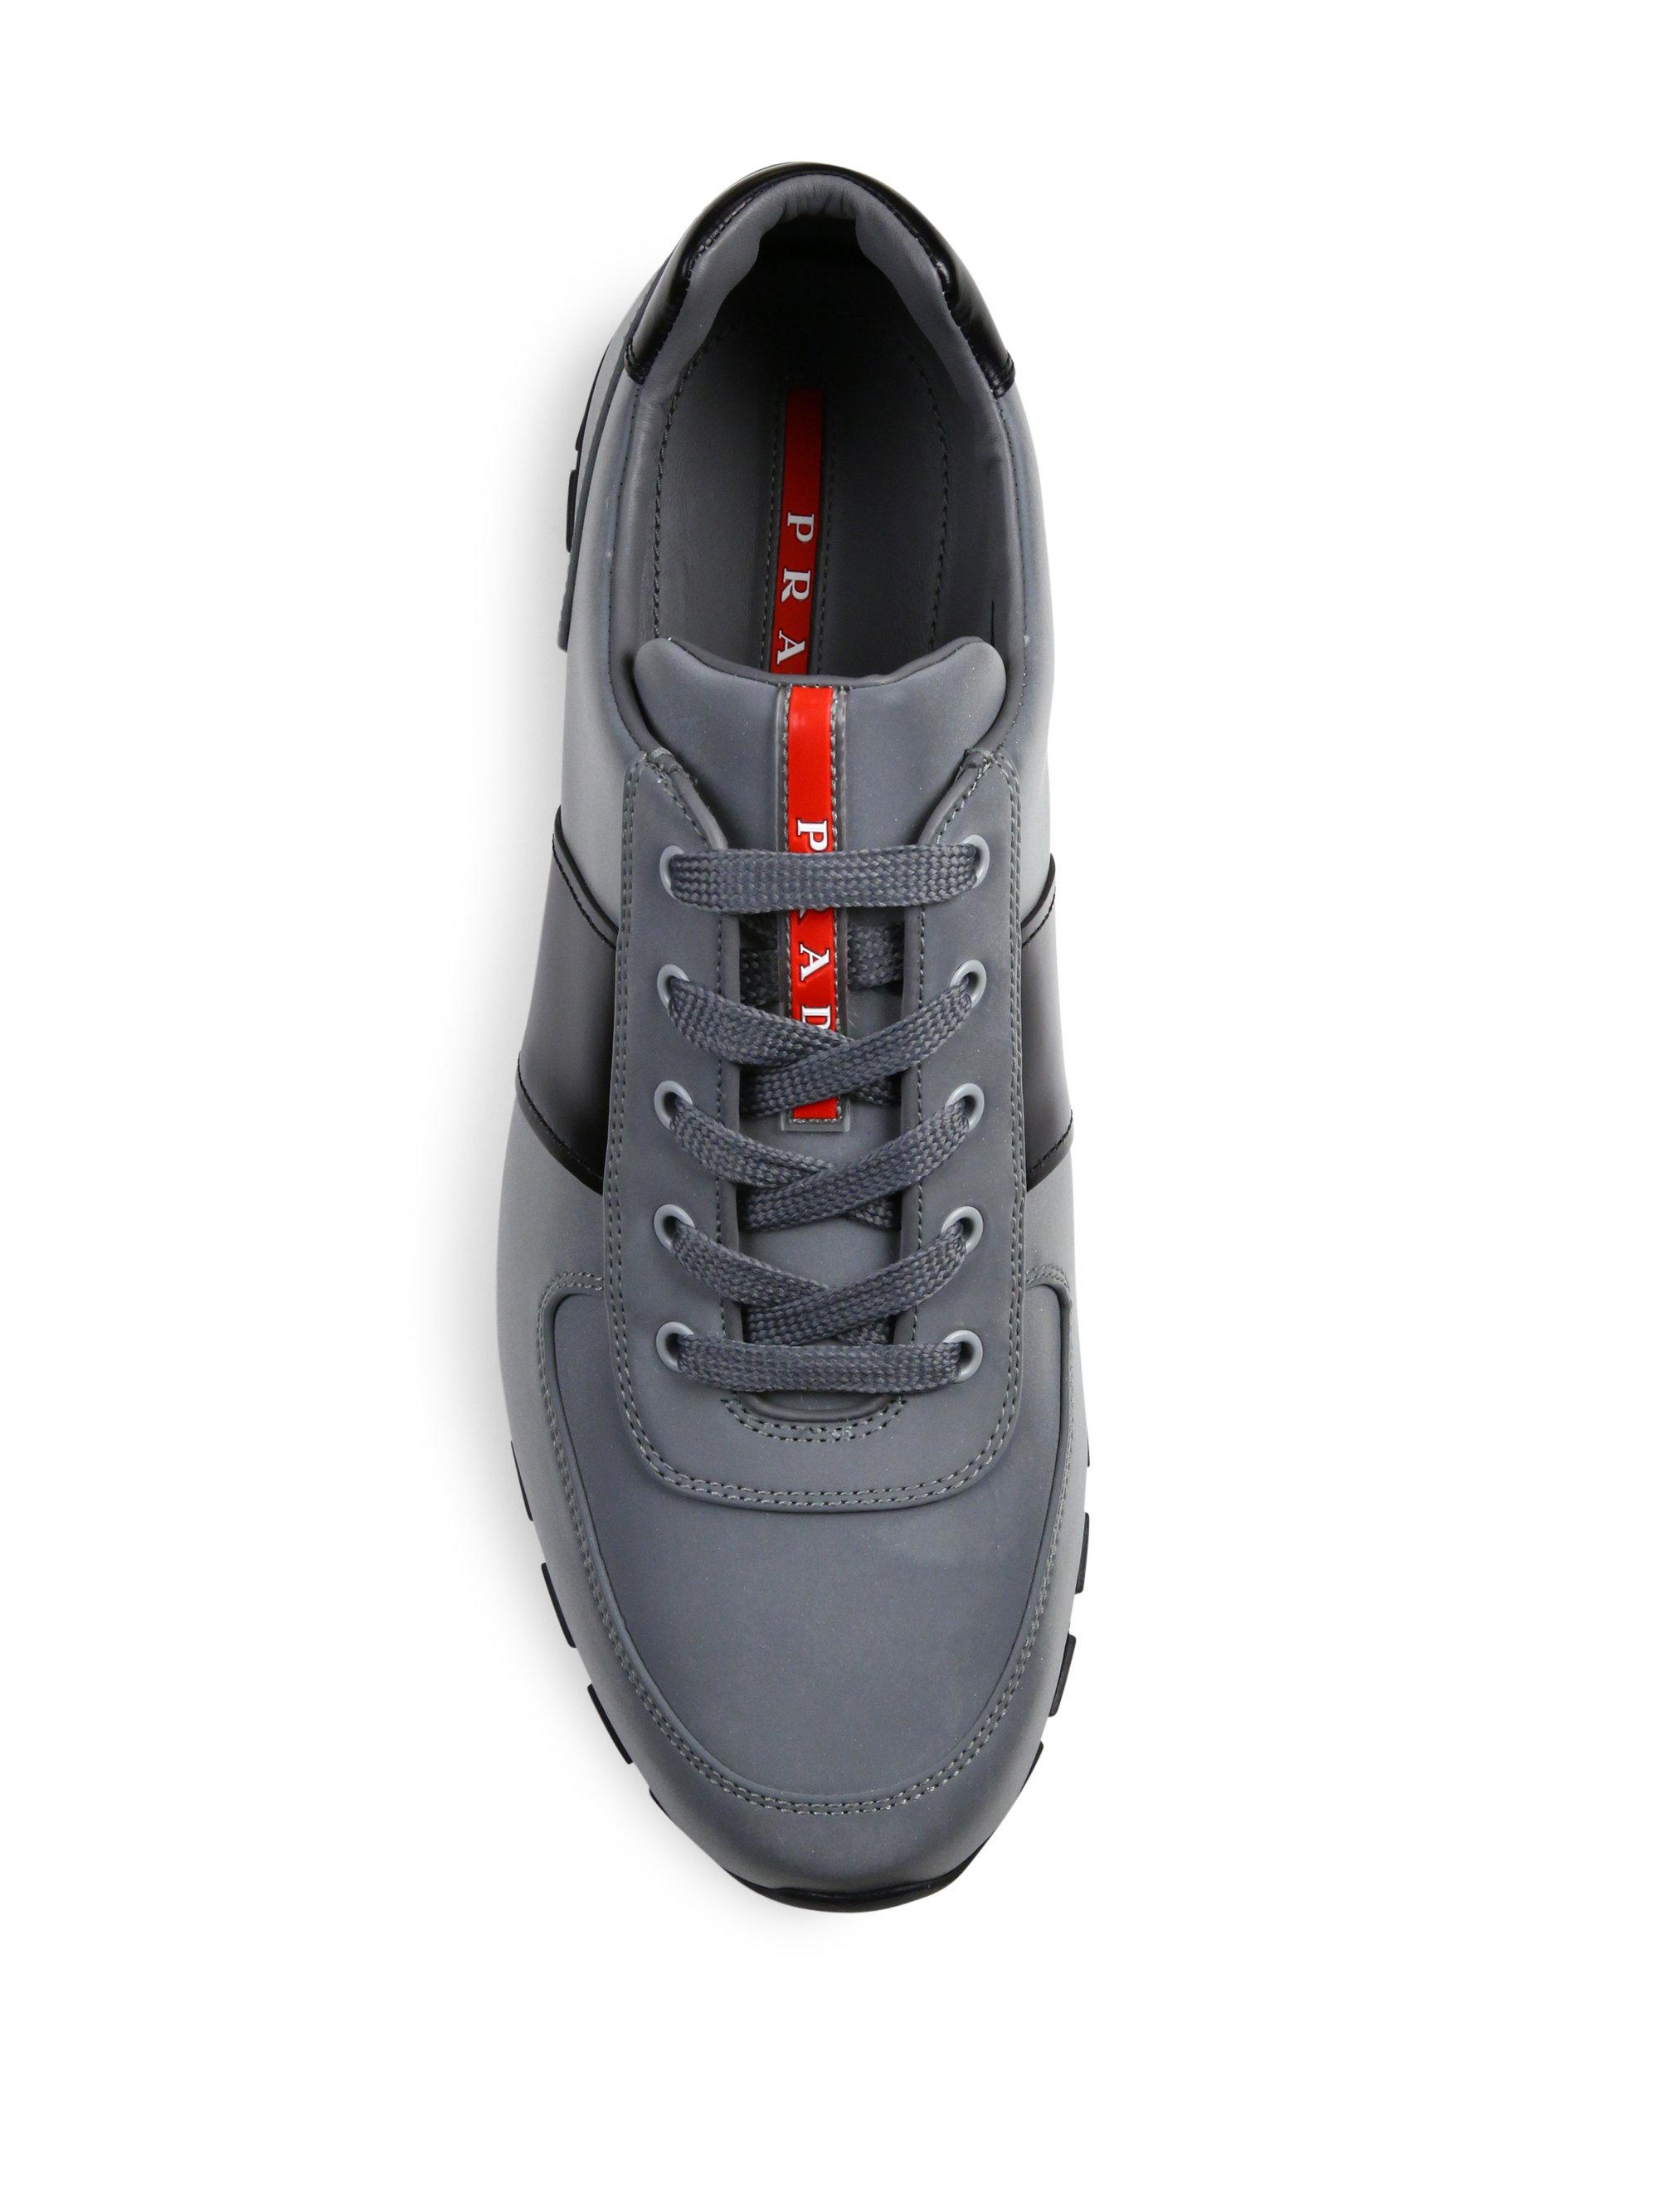 Lyst Prada Reflective Leather & Nylon Running Sneakers in Black for Men